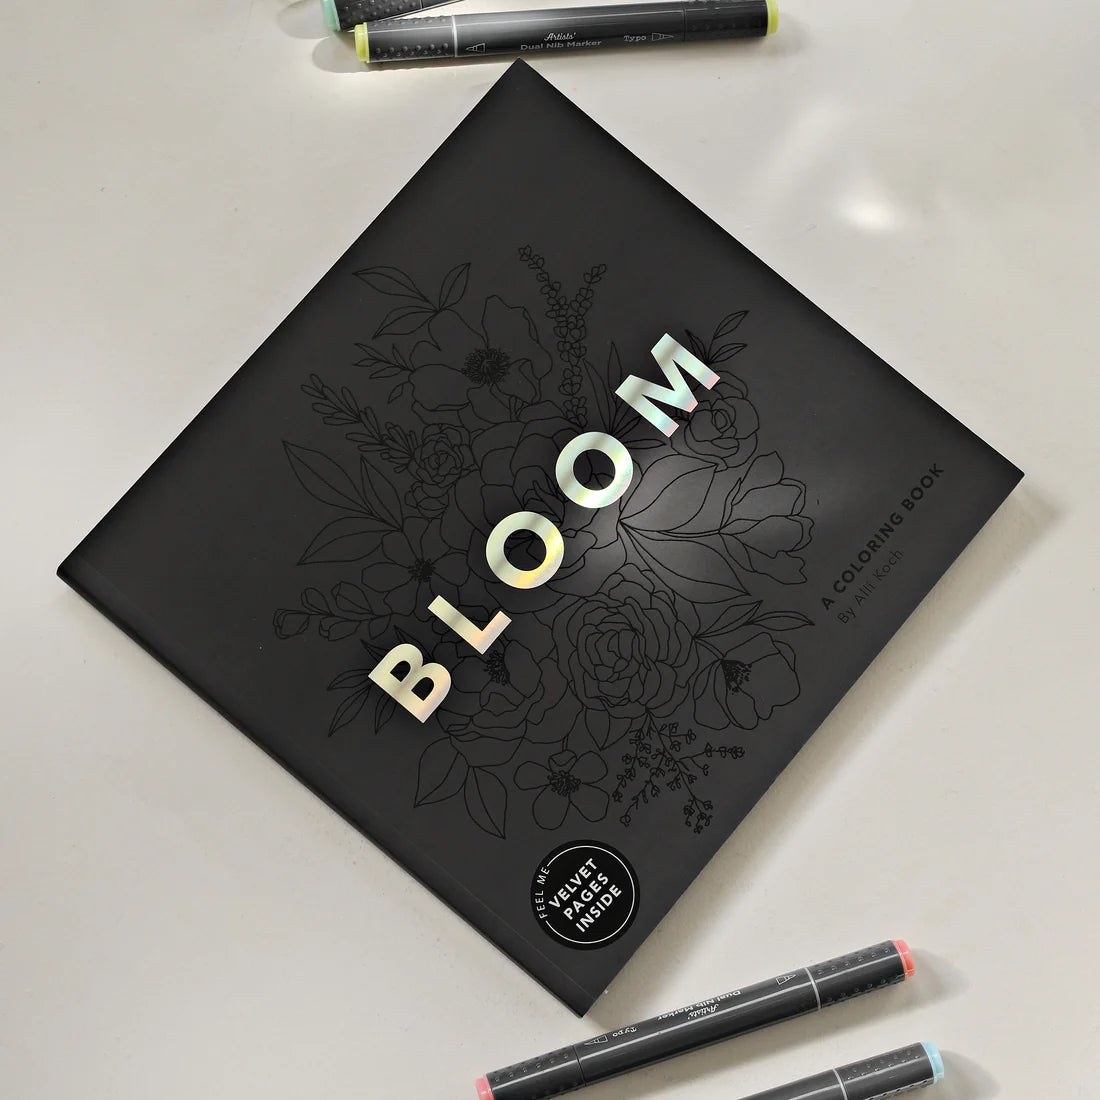 Bloom Mini Floral Coloring Book